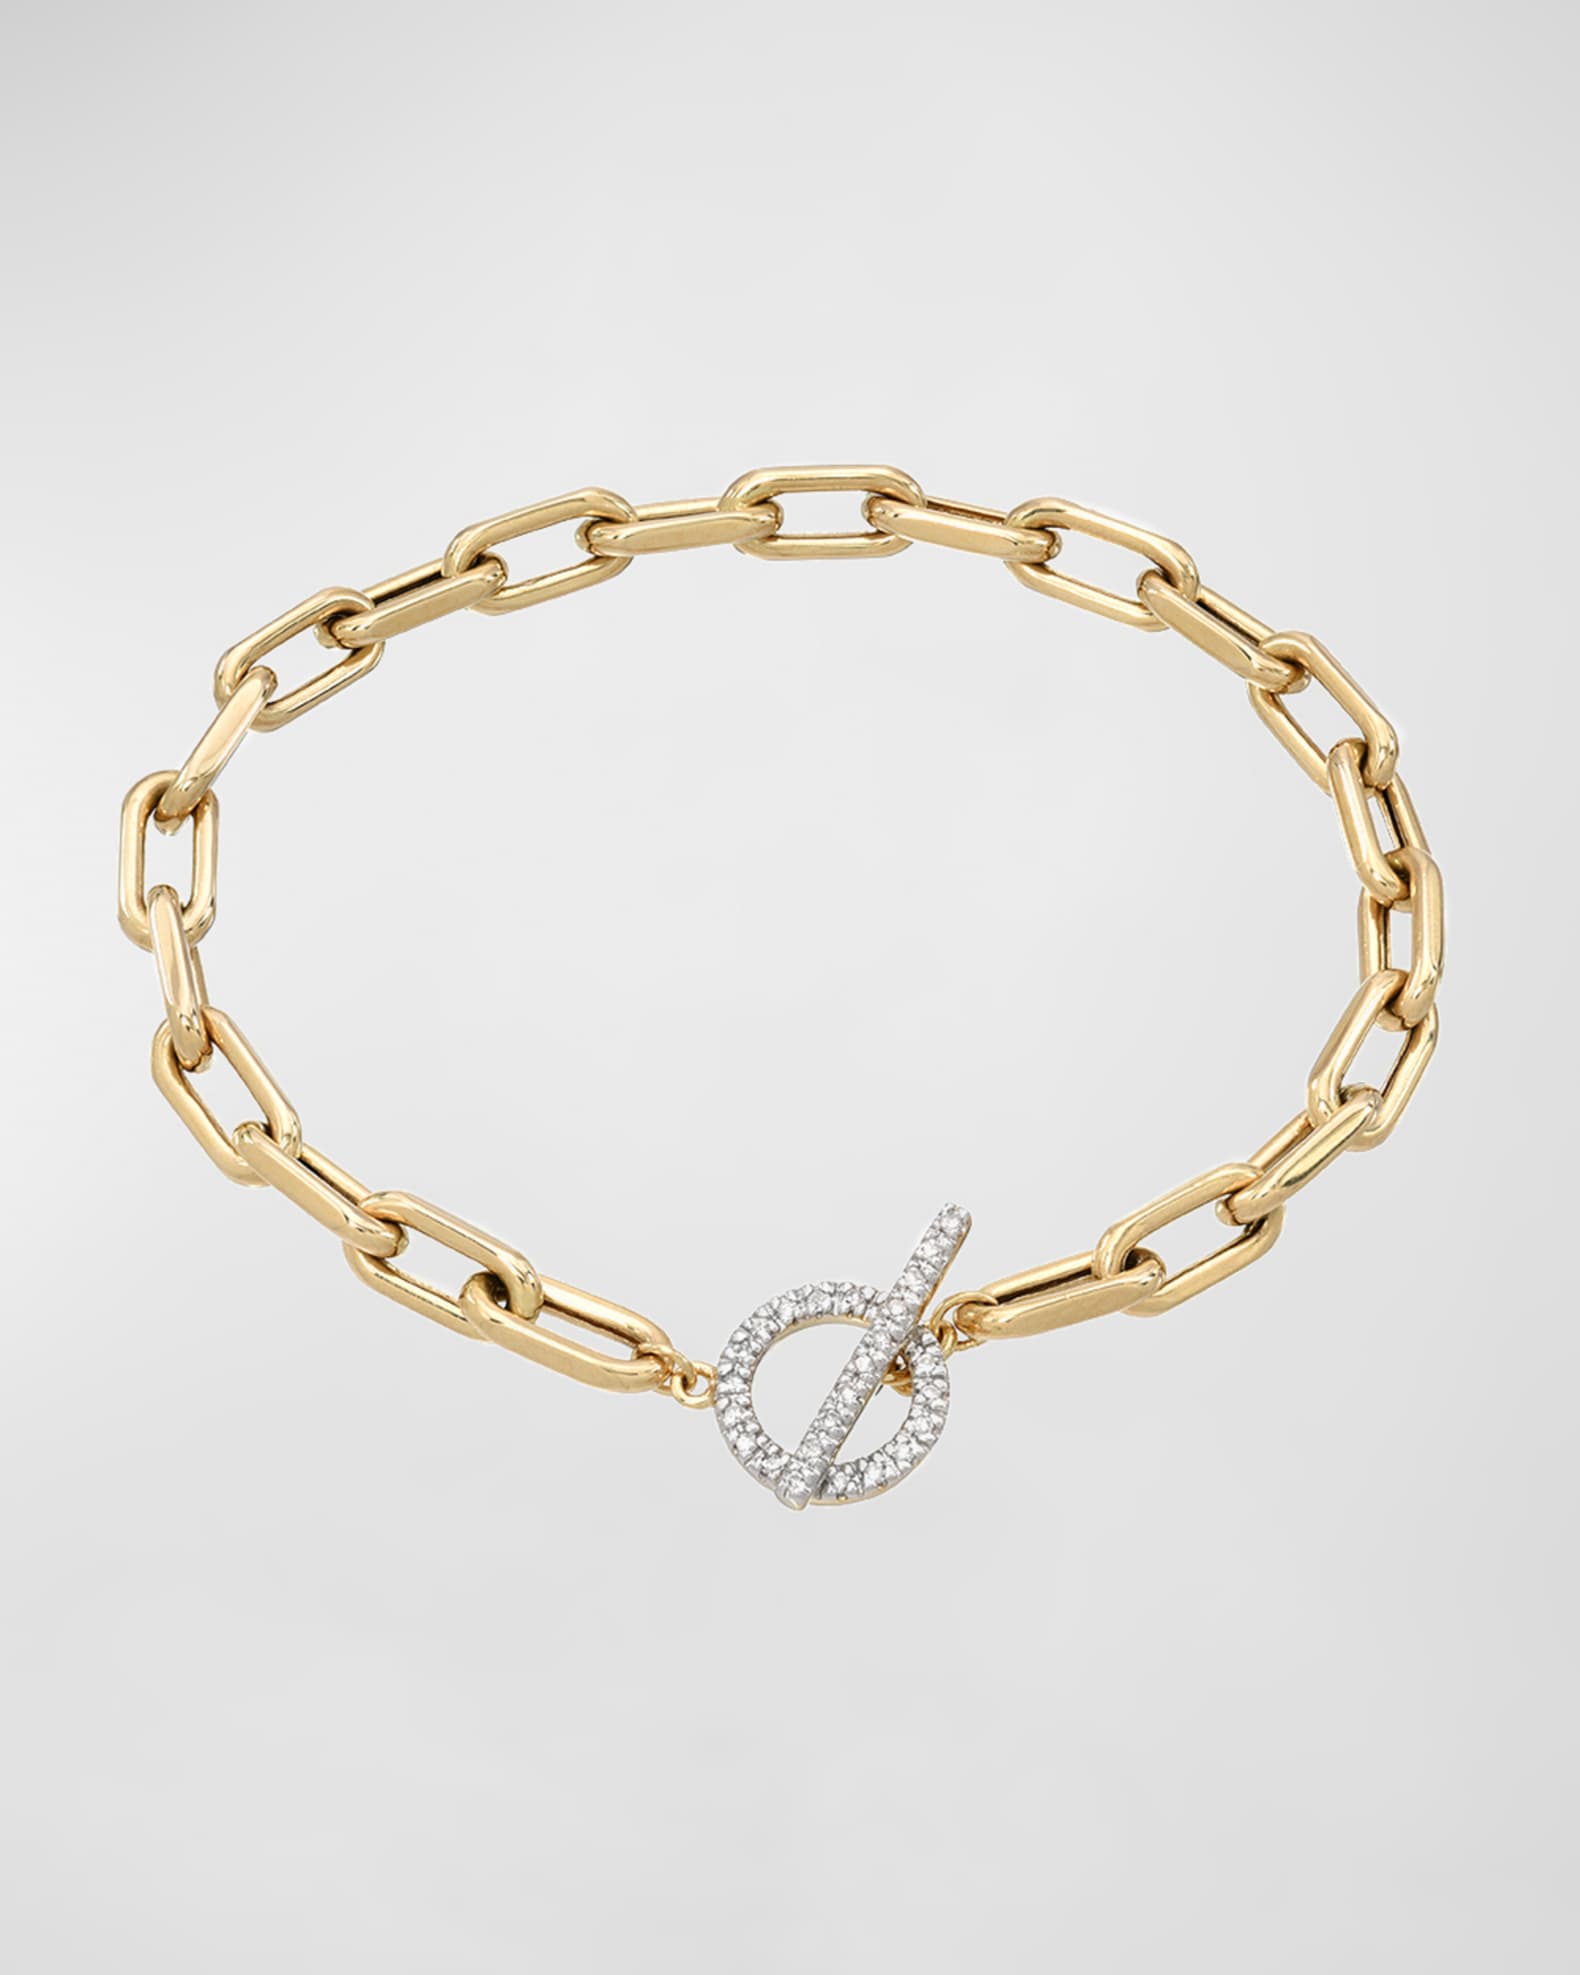 Zoe Lev Jewelry 14k Gold Open-Link Chain Bracelet w/ Diamond Toggle ...